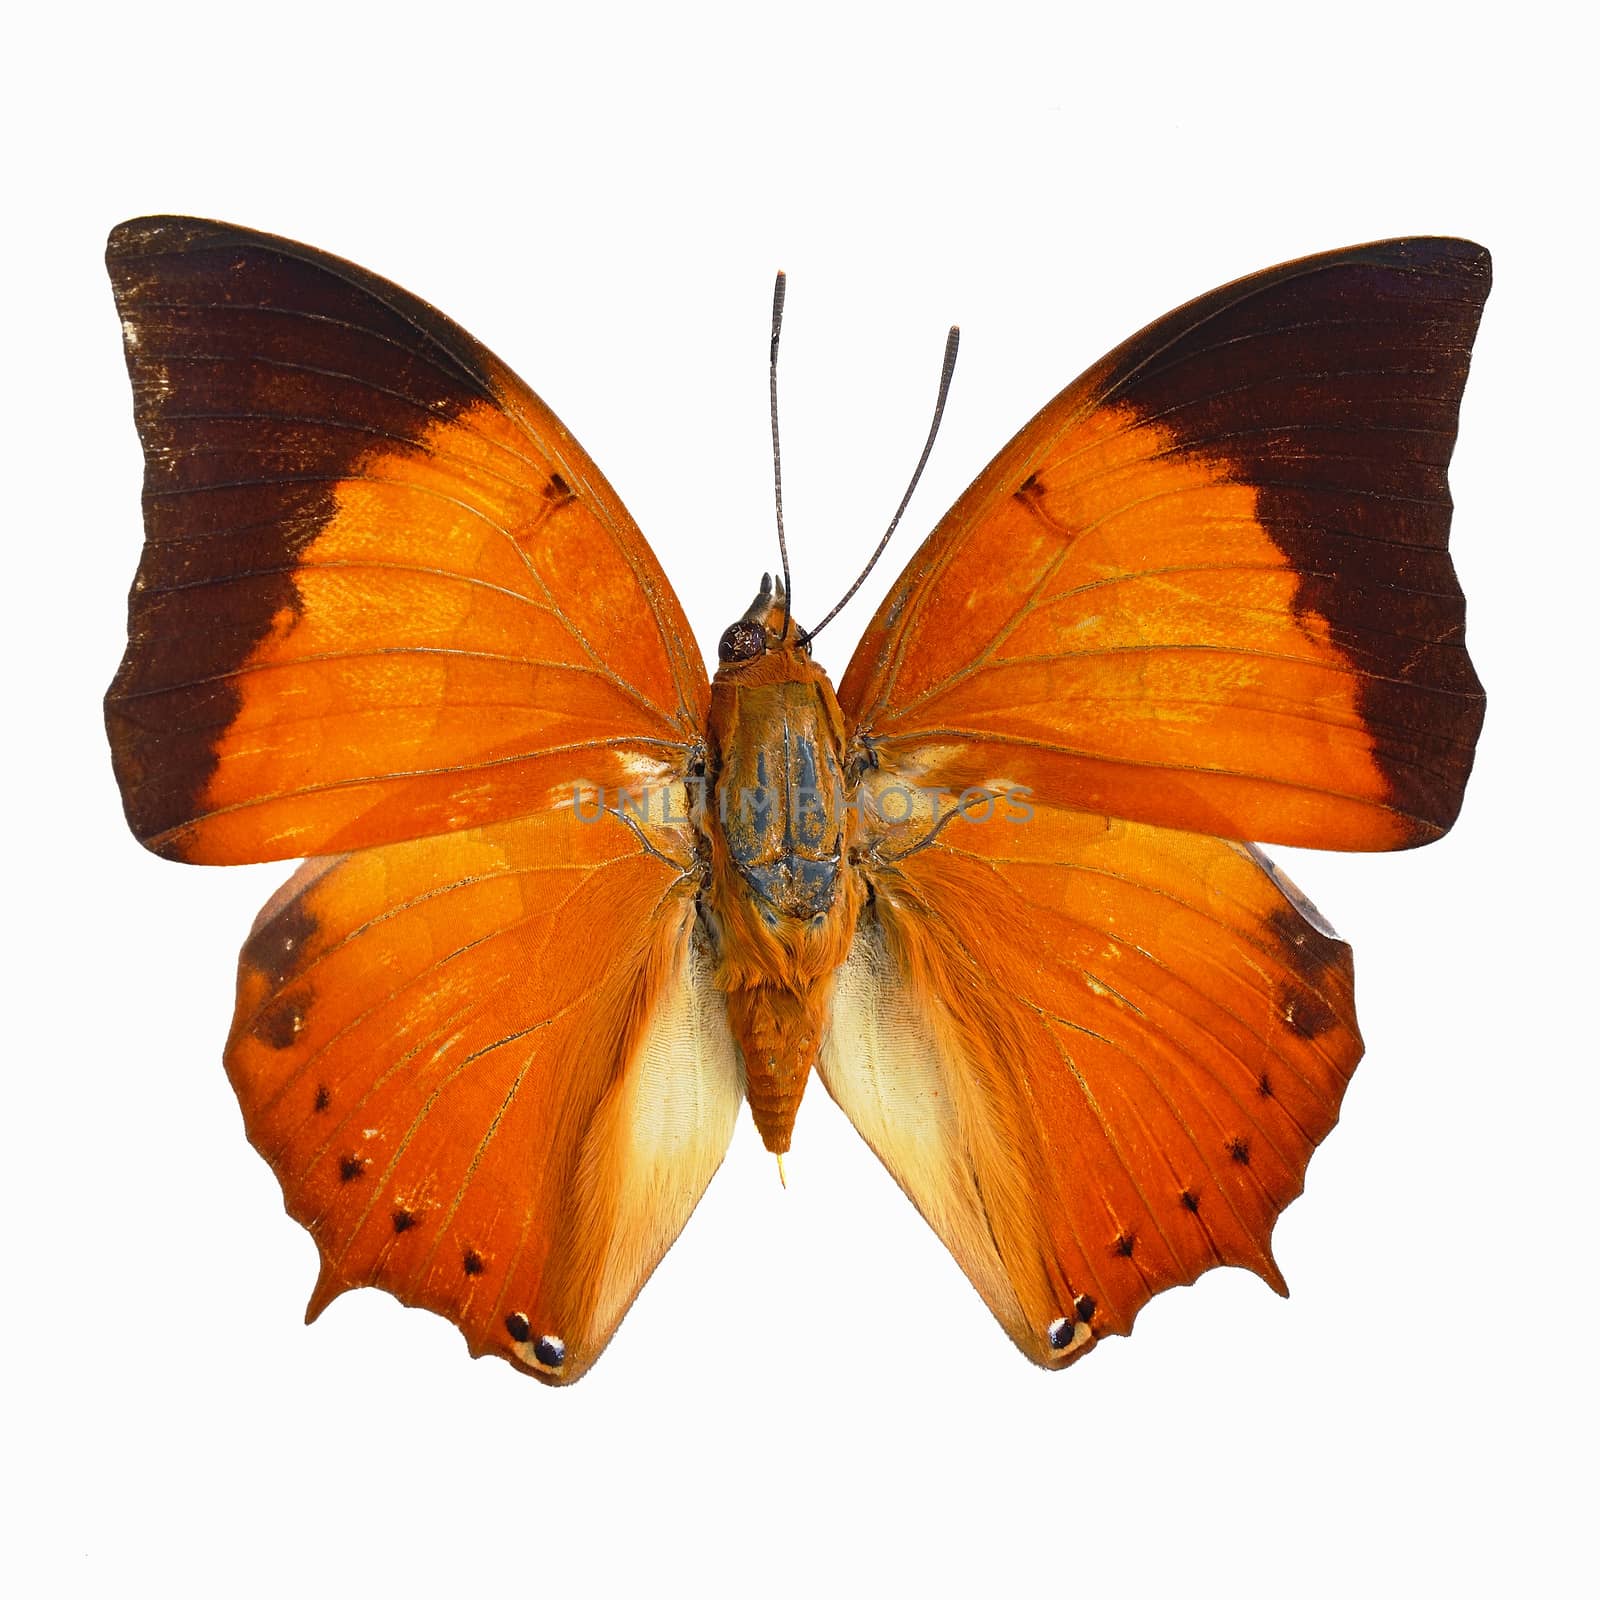 Common Tawny Rajah butterfly by panuruangjan